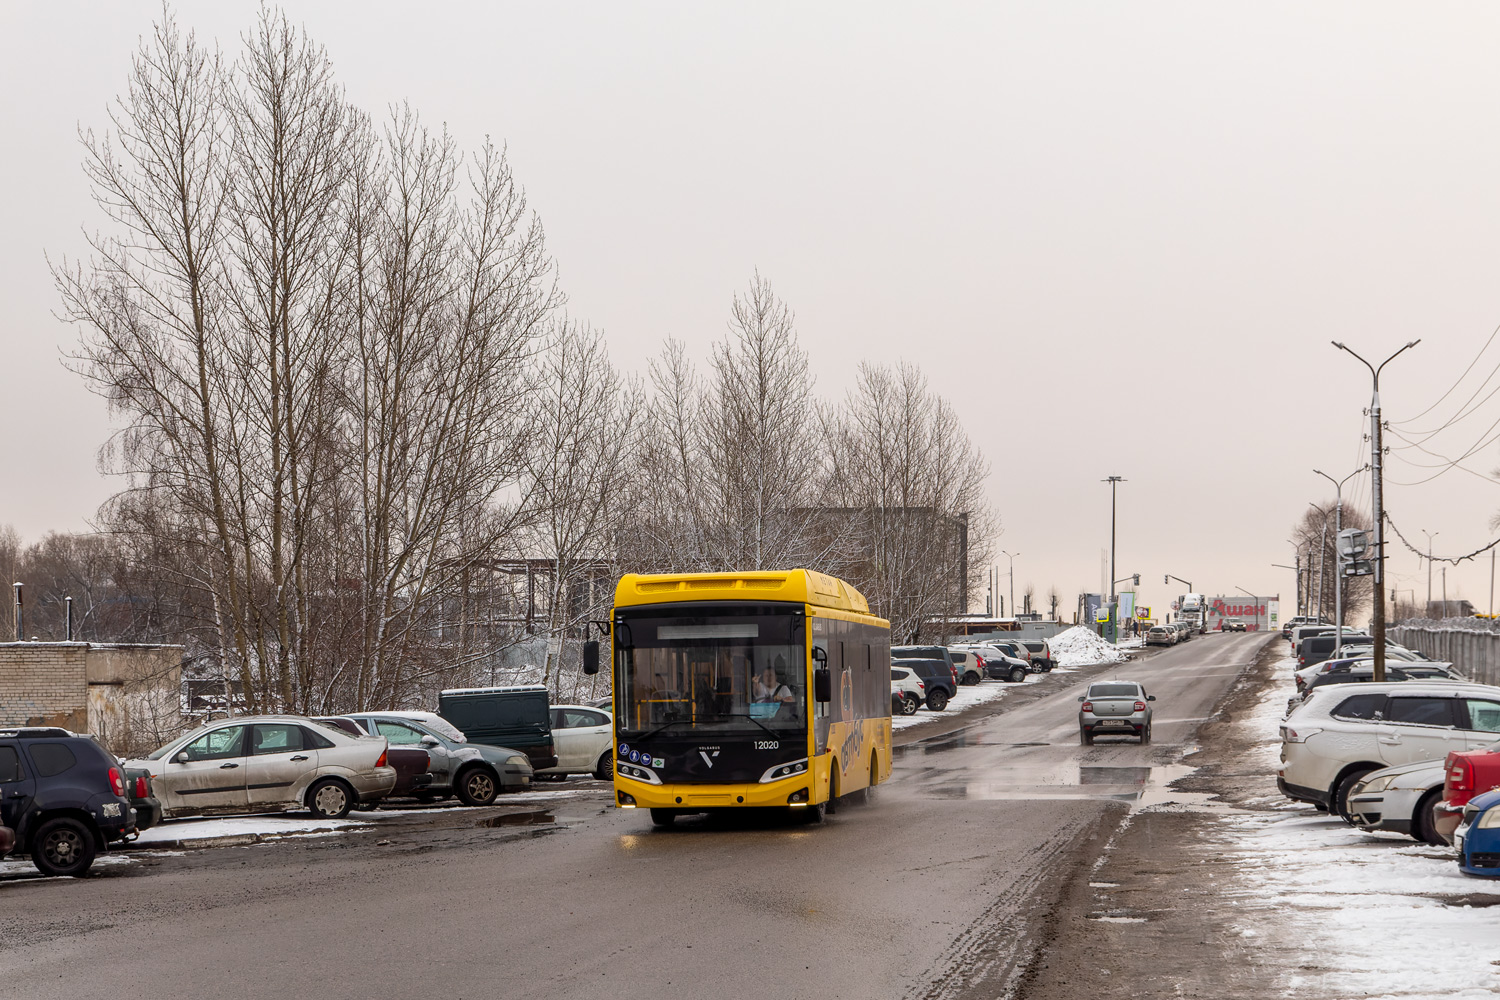 Yaroslavl region, Volgabus-4298.G4 (CNG) # 12020; Yaroslavl region — New buses